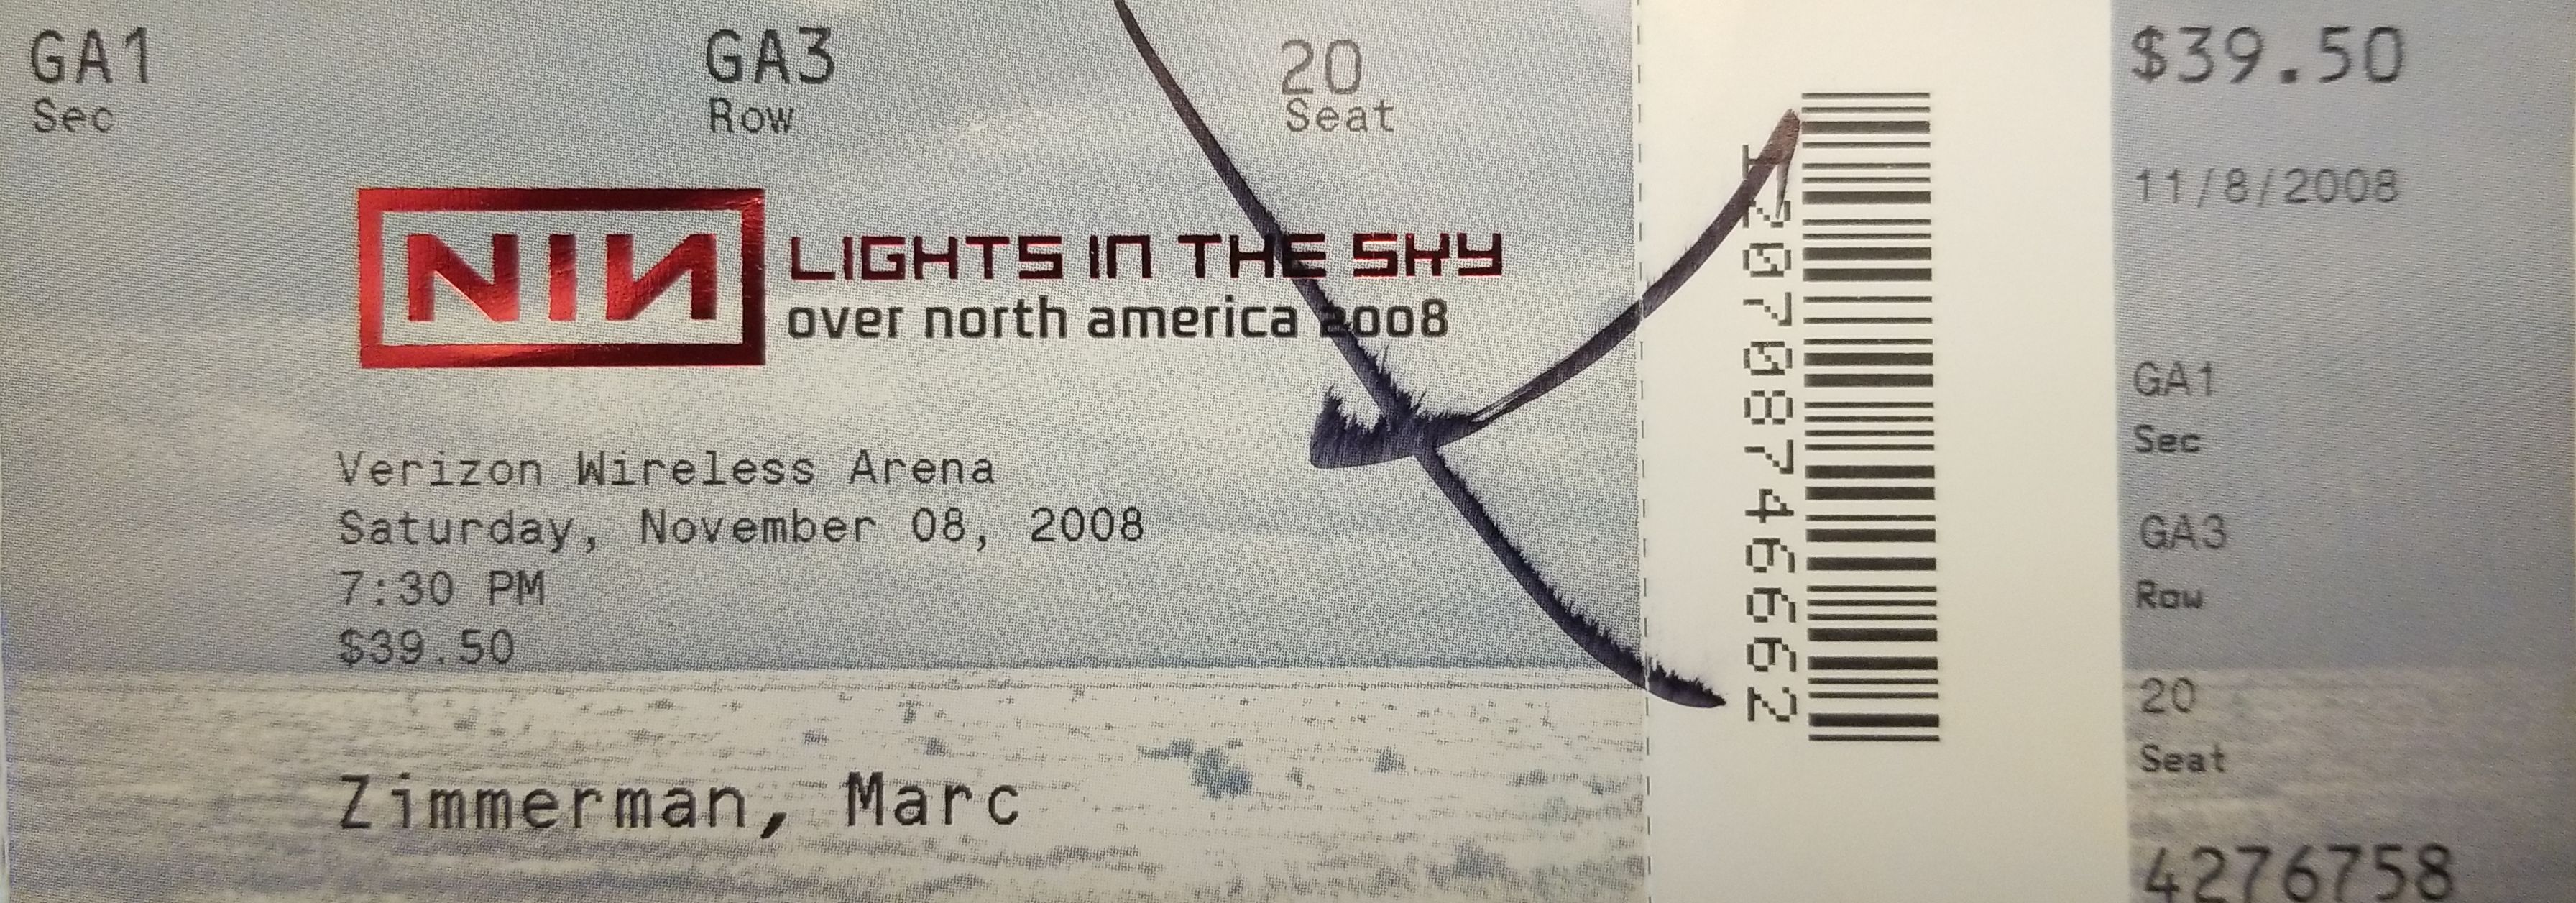 2008/11/08 Ticket